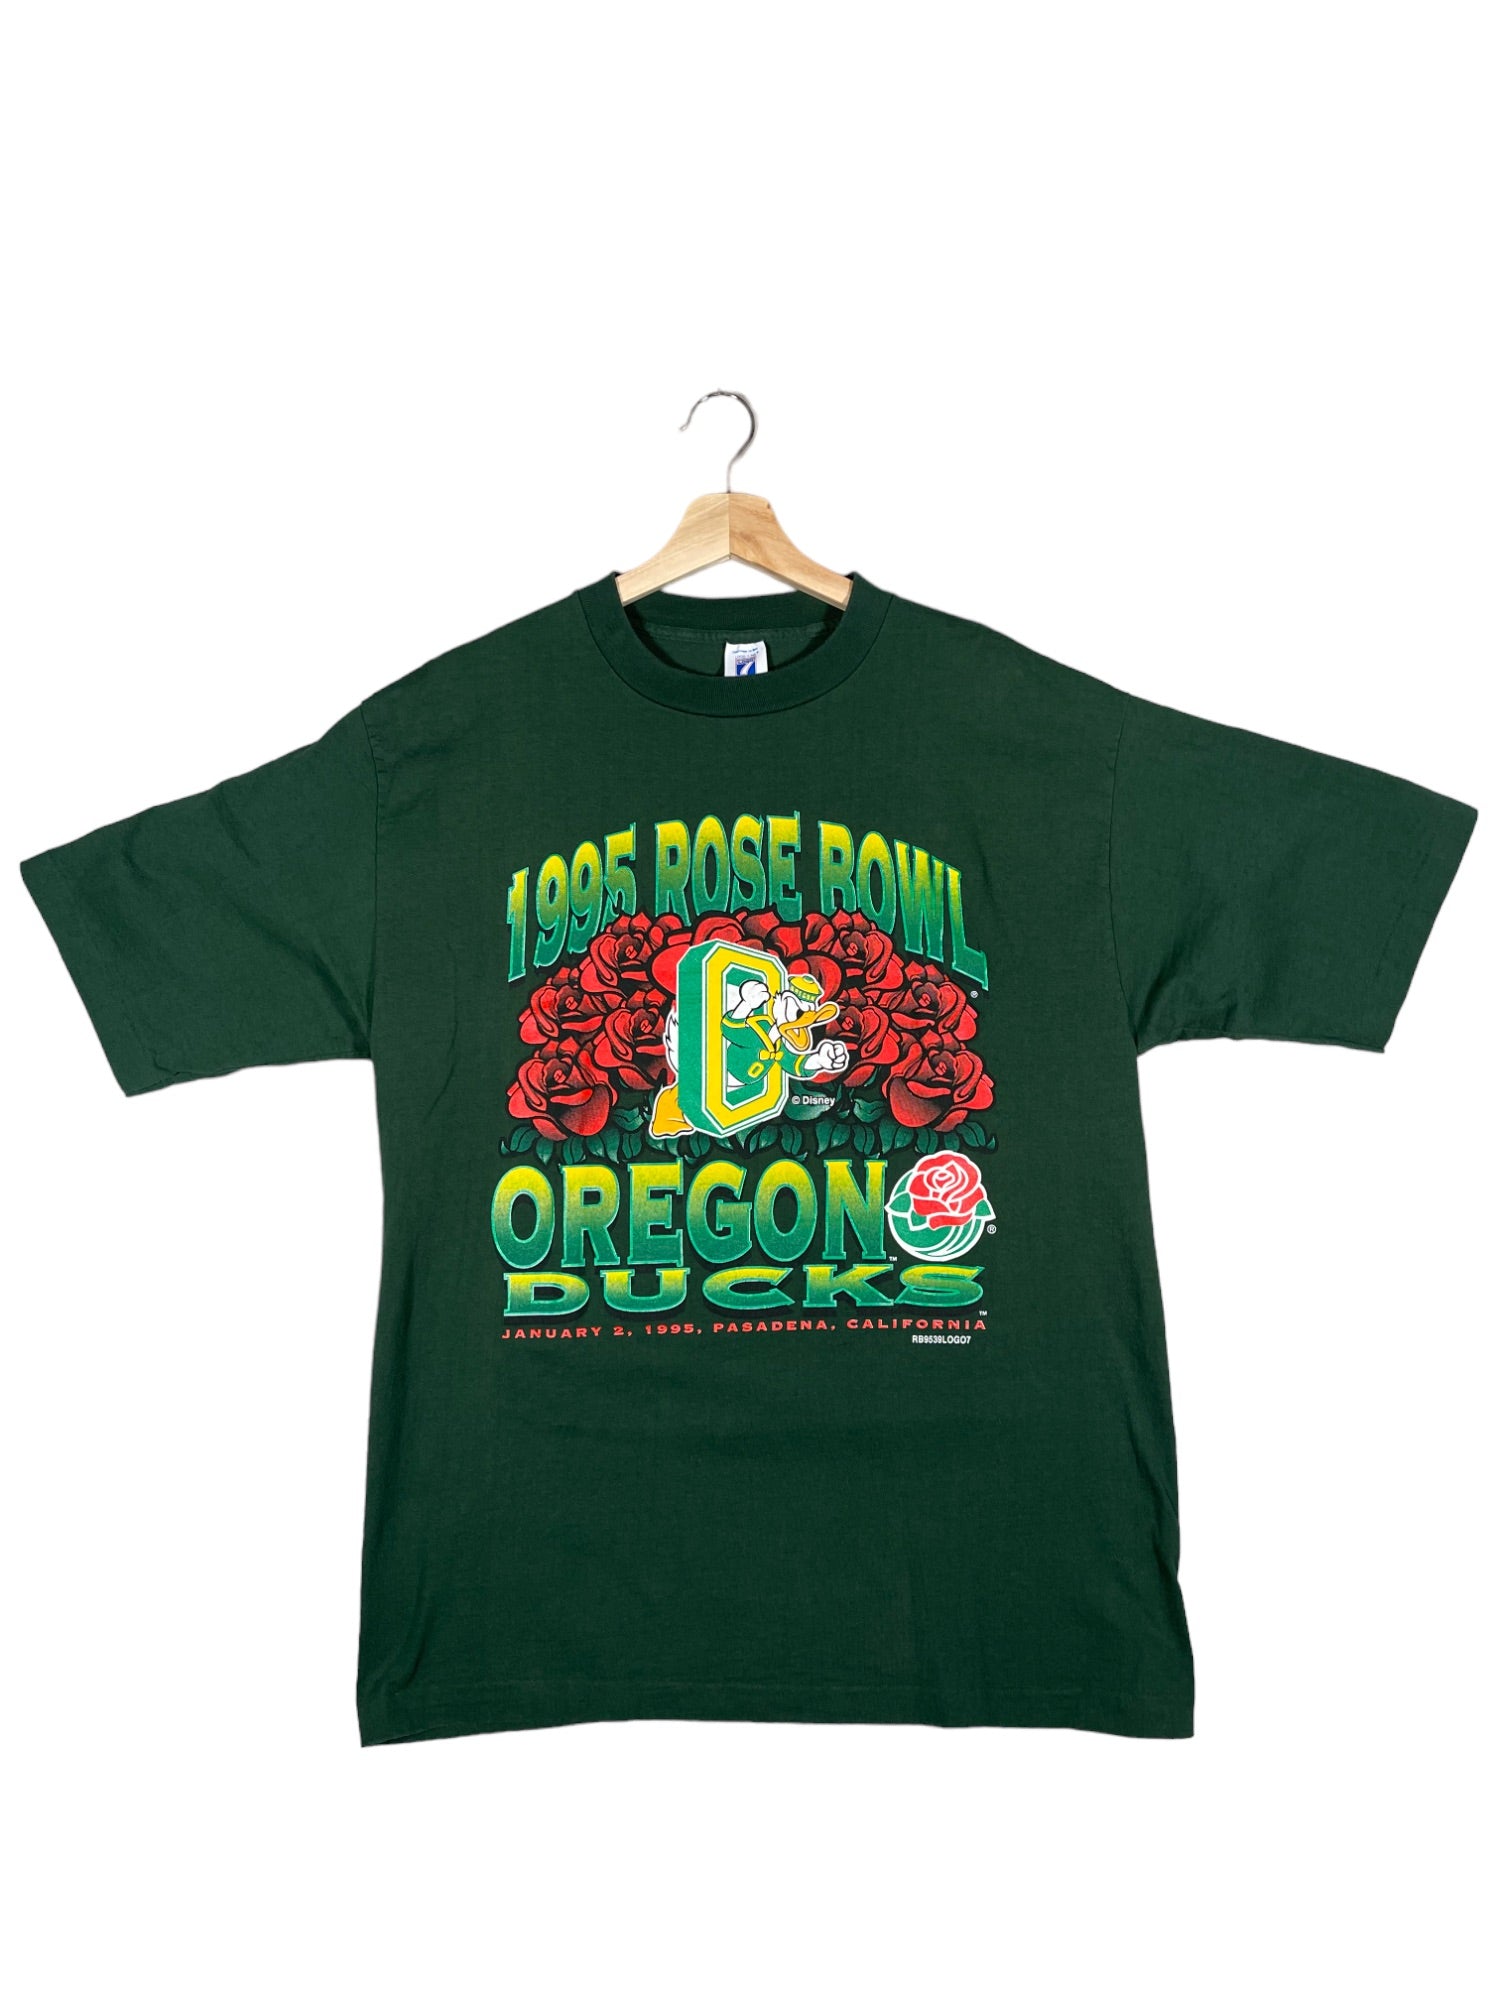 Vintage 1995 Oregon Ducks Rosebowl T-Shirt